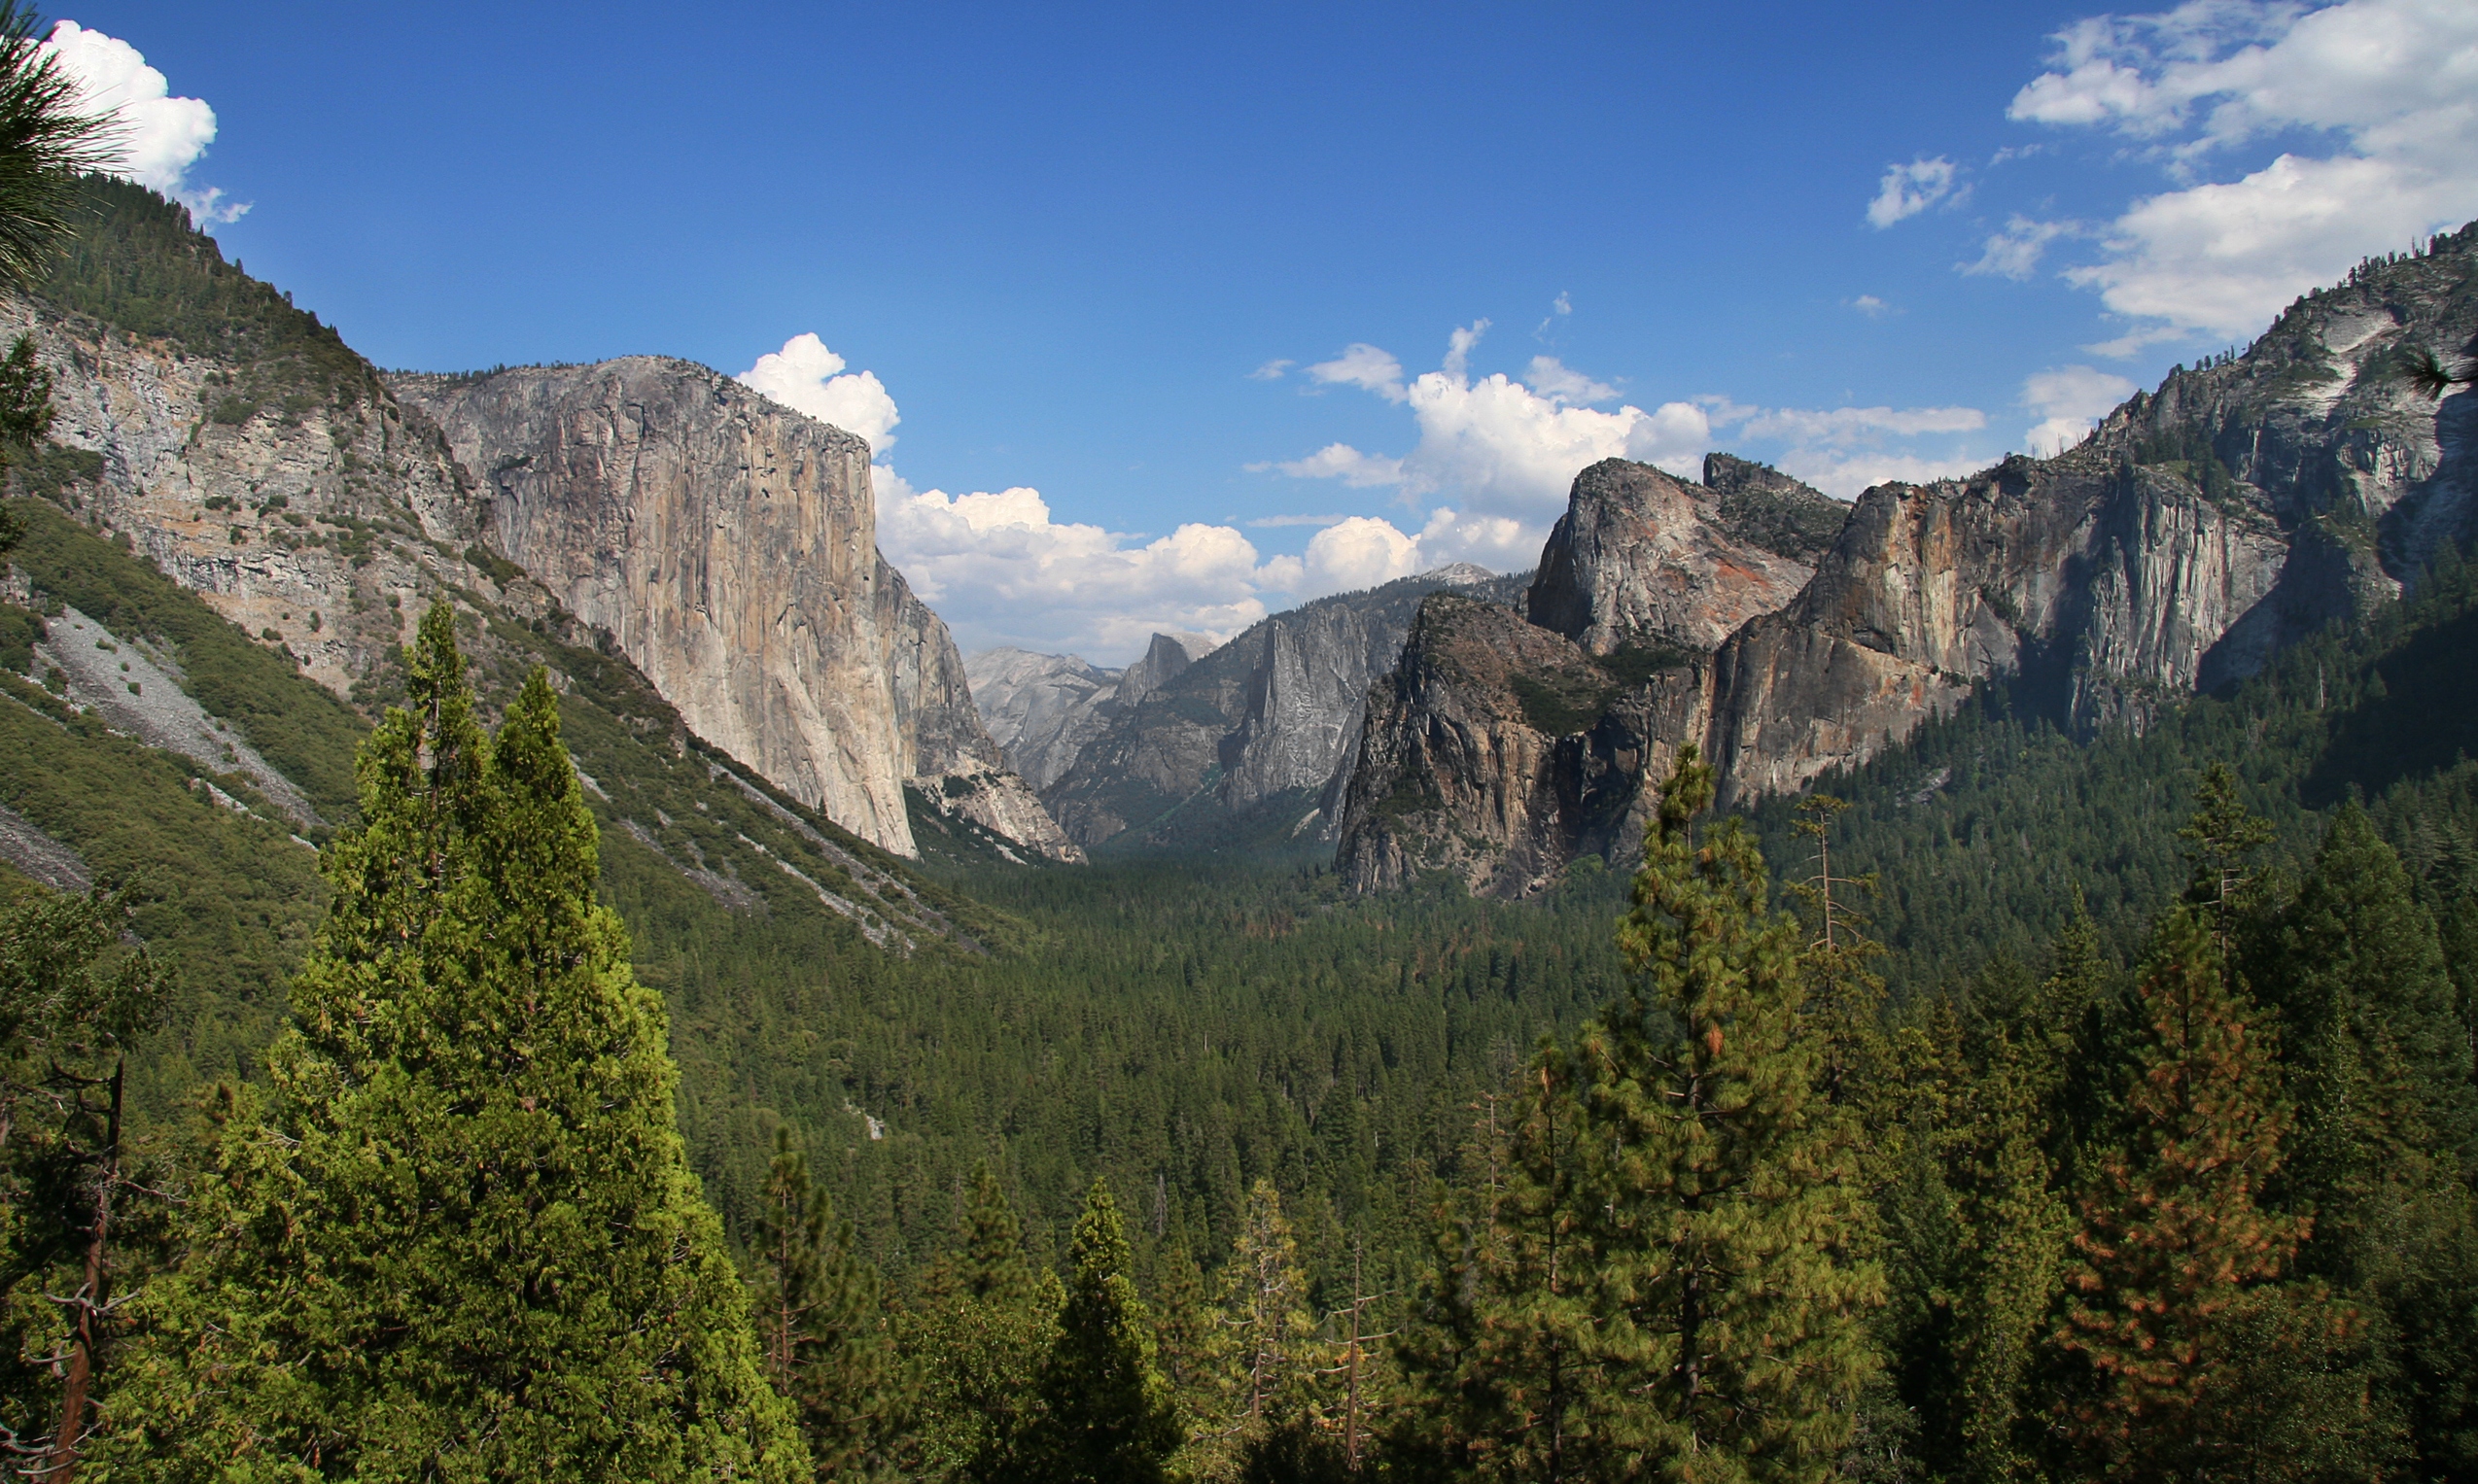 File:YosemitePark2 amk.jpg - Wikipedia